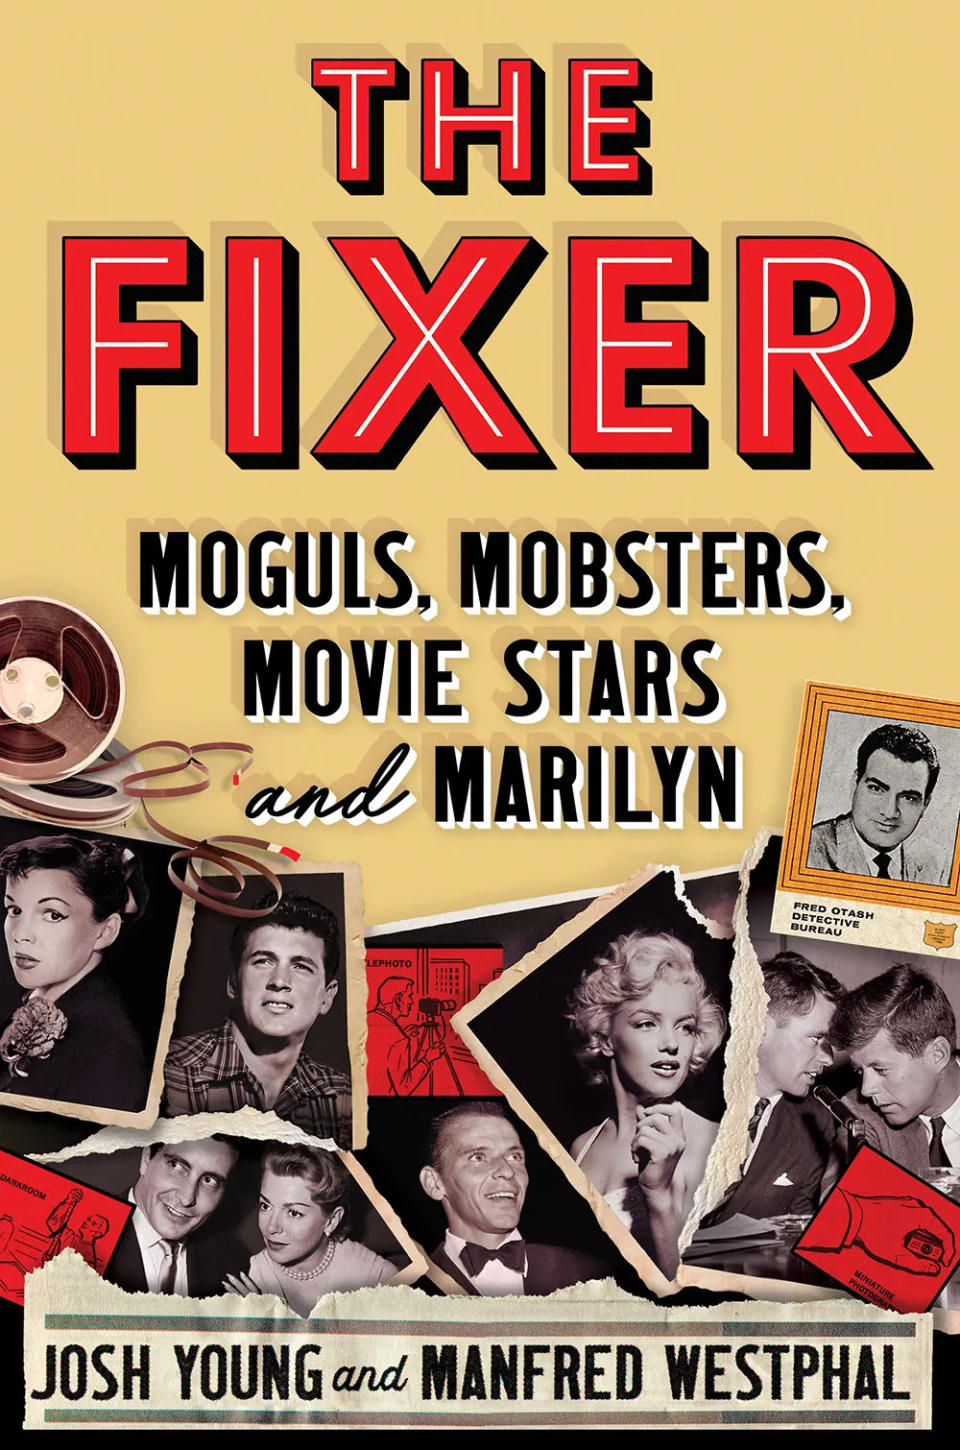 The Fixer book cover